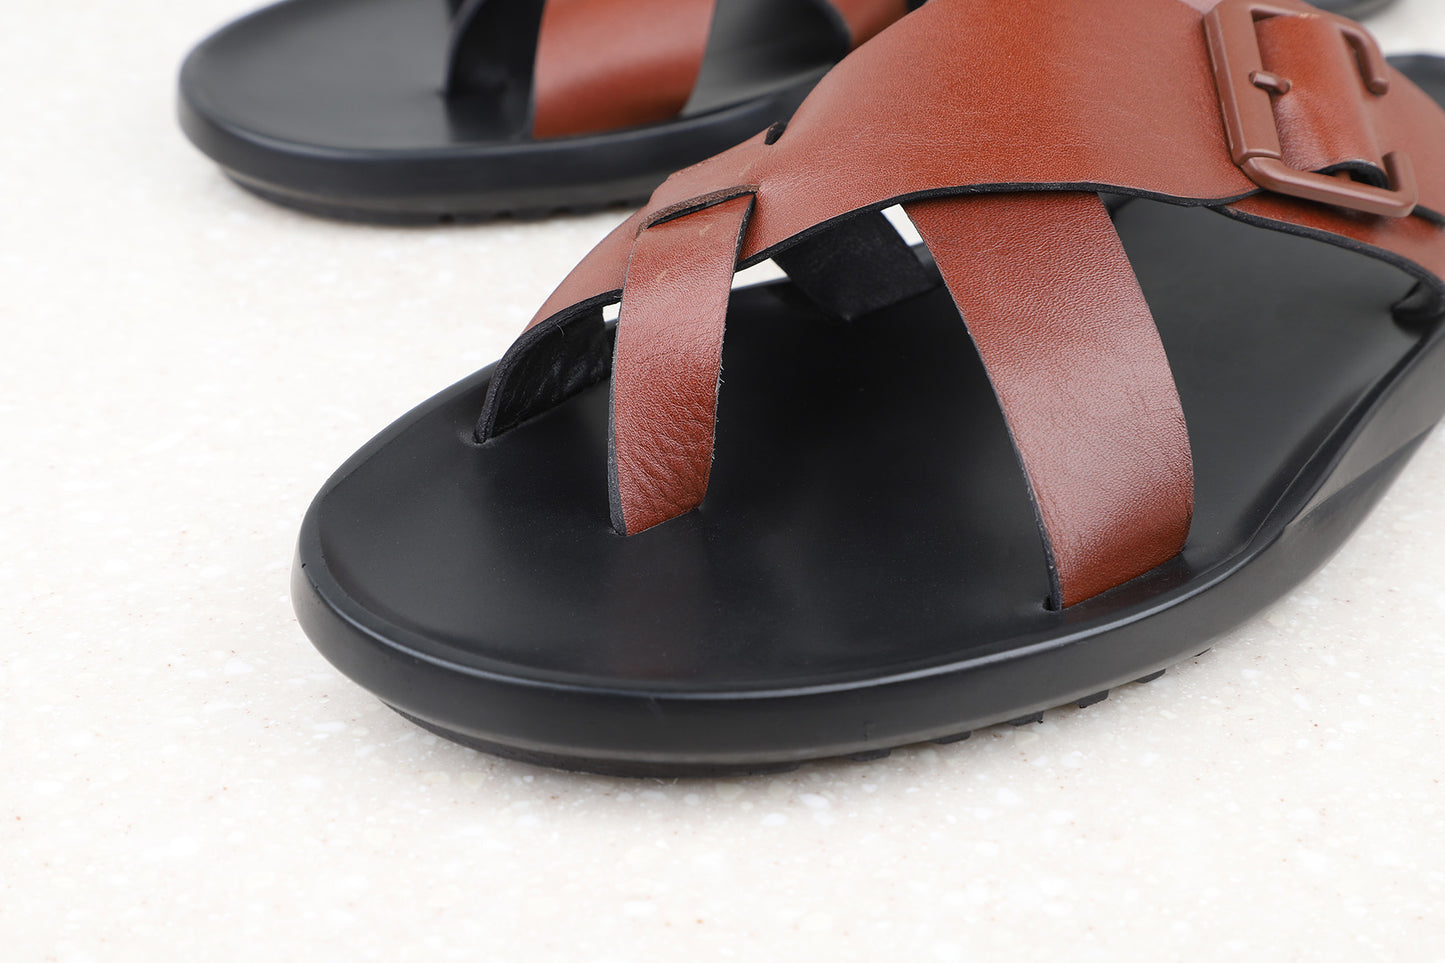 Atesber Tan Solid Thong Sandals For Men